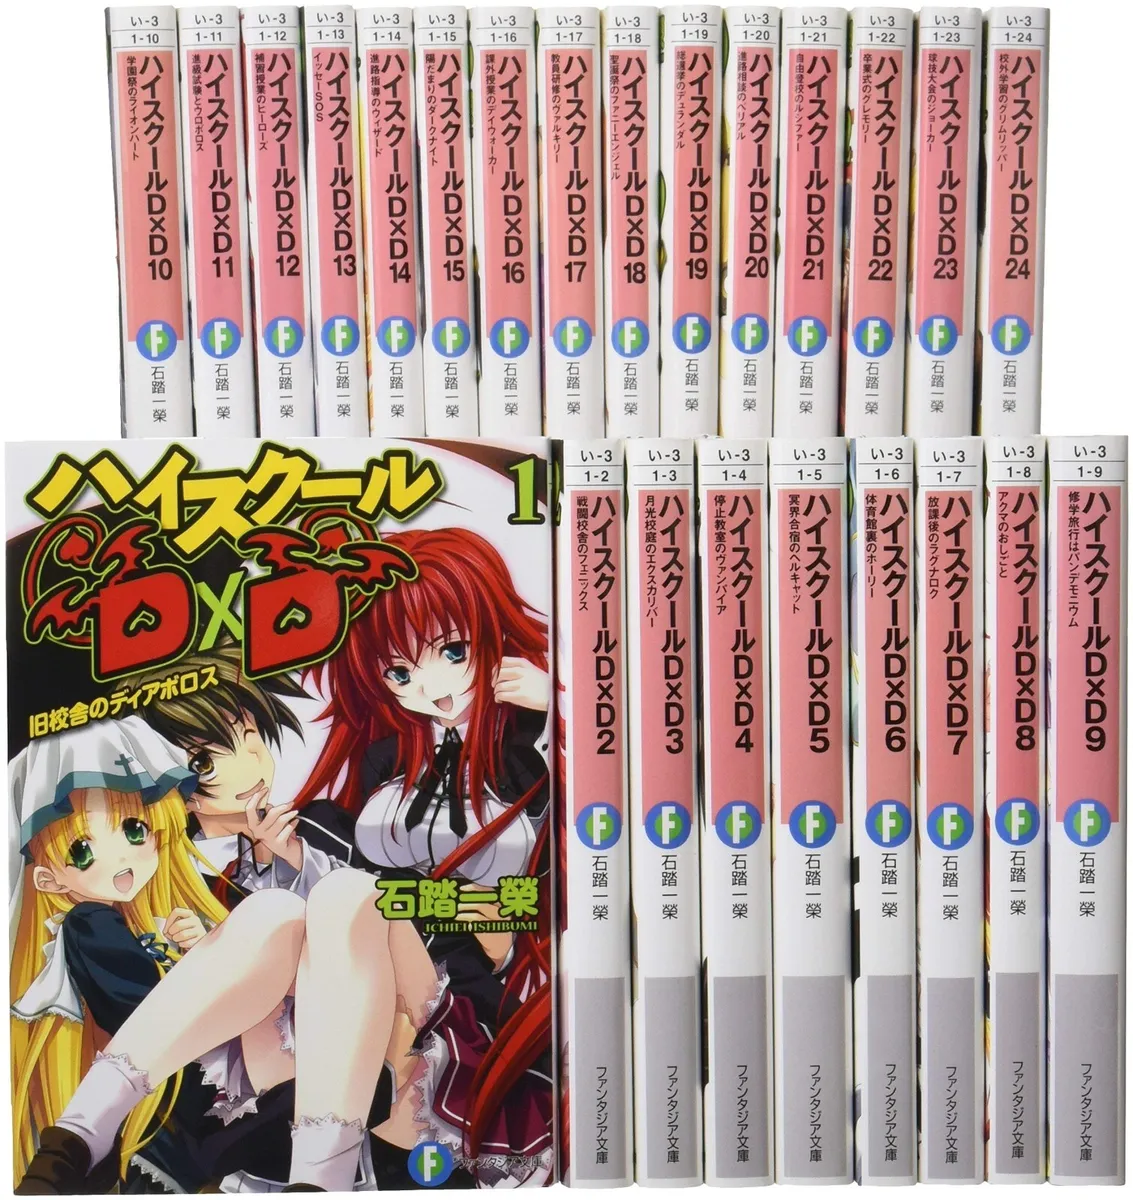 High School DxD Manga Volume 9